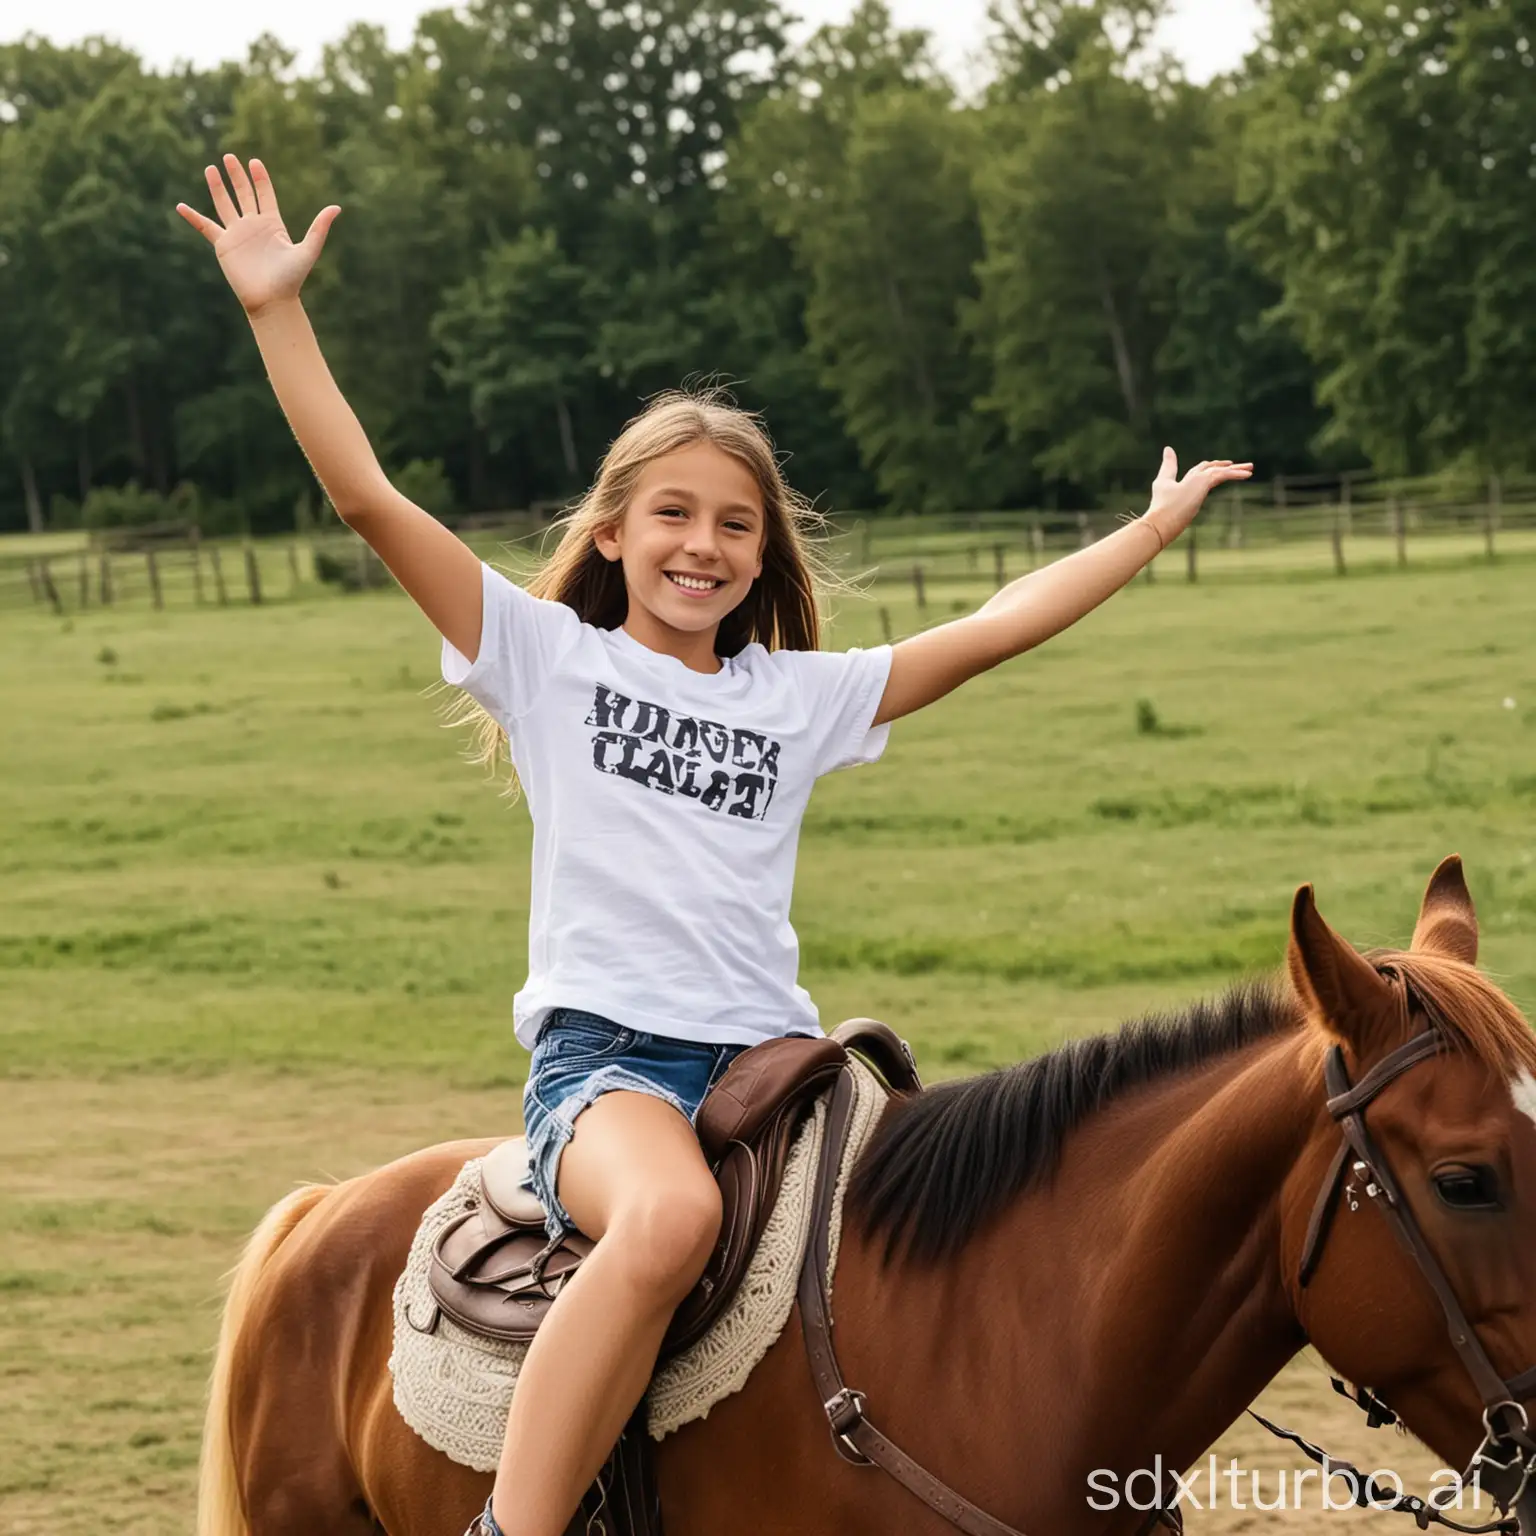 Joyful-10YearOld-Girl-Riding-Horse-Bareback-with-Arms-Raised